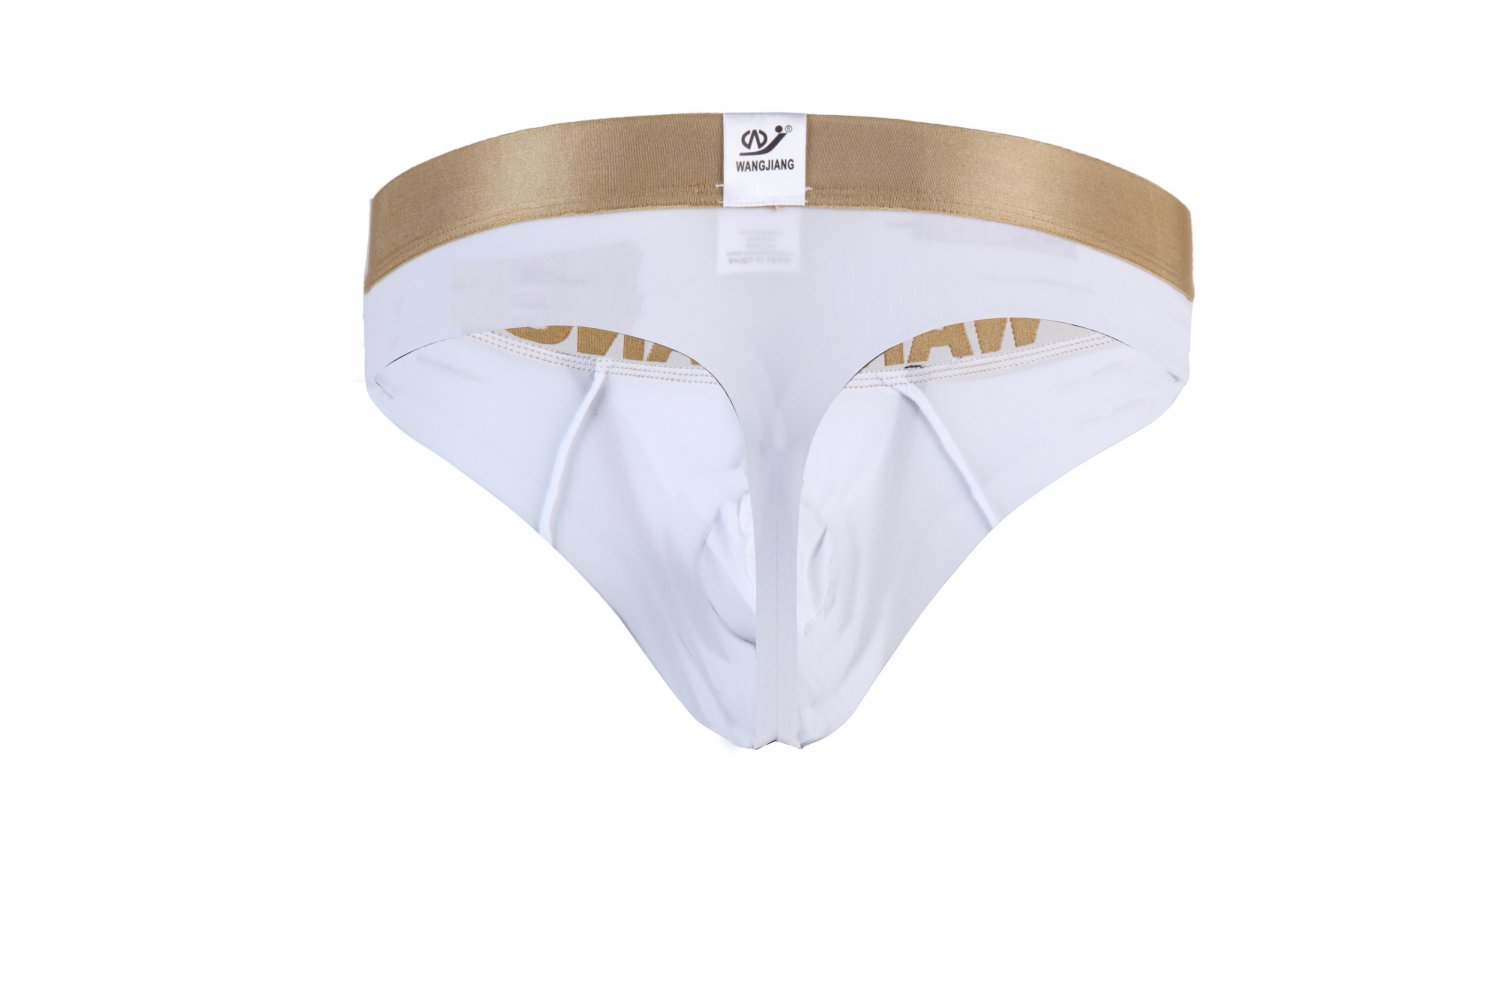 3PK Wangjiang Men's sexy underwear ice silky thong g-string underpants White #5008DK